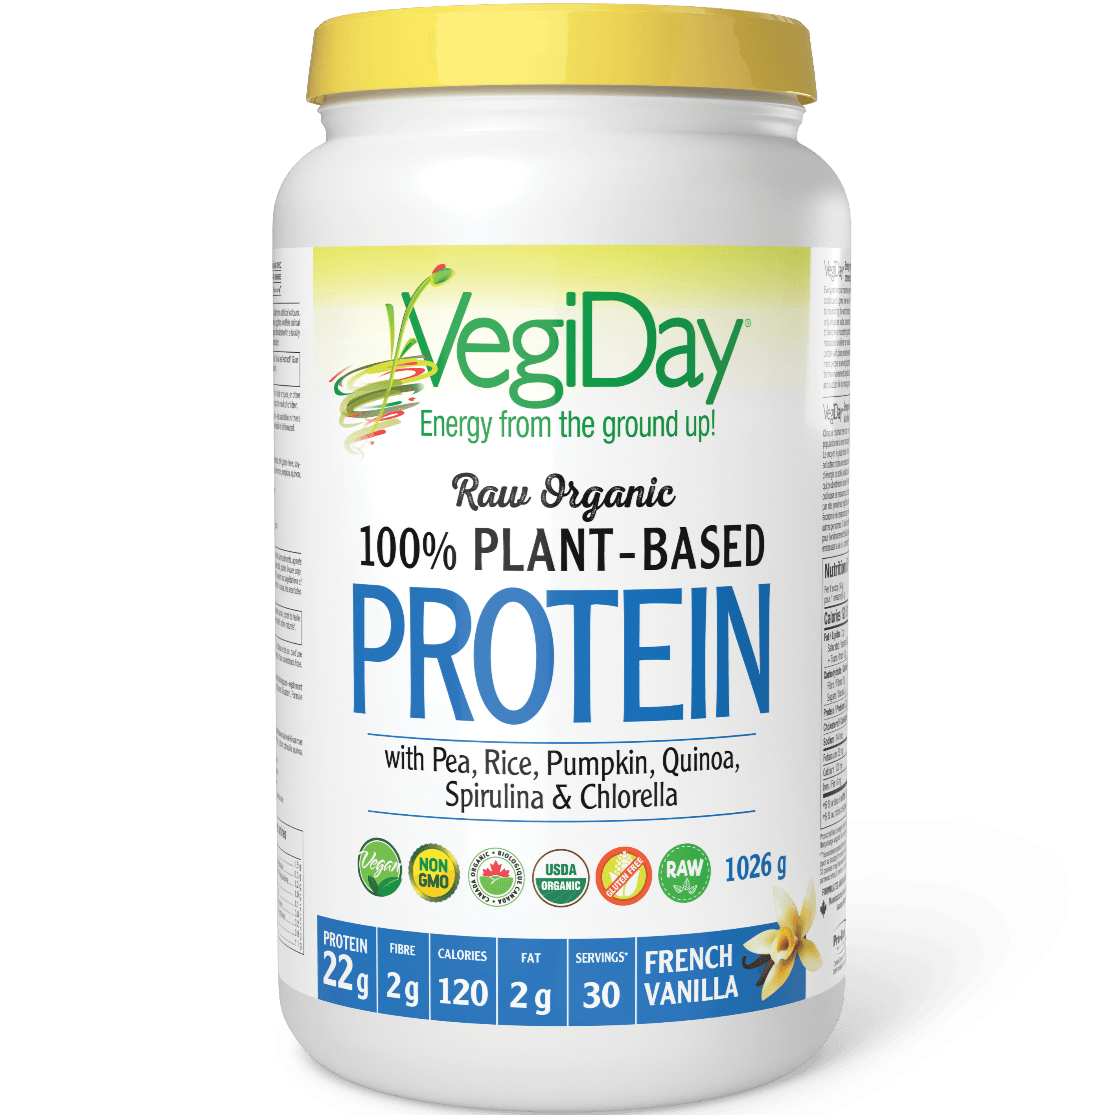 Vegiday Raw Organic Plant Based Protein French Vanilla 1026g Supplements - Protein at Village Vitamin Store